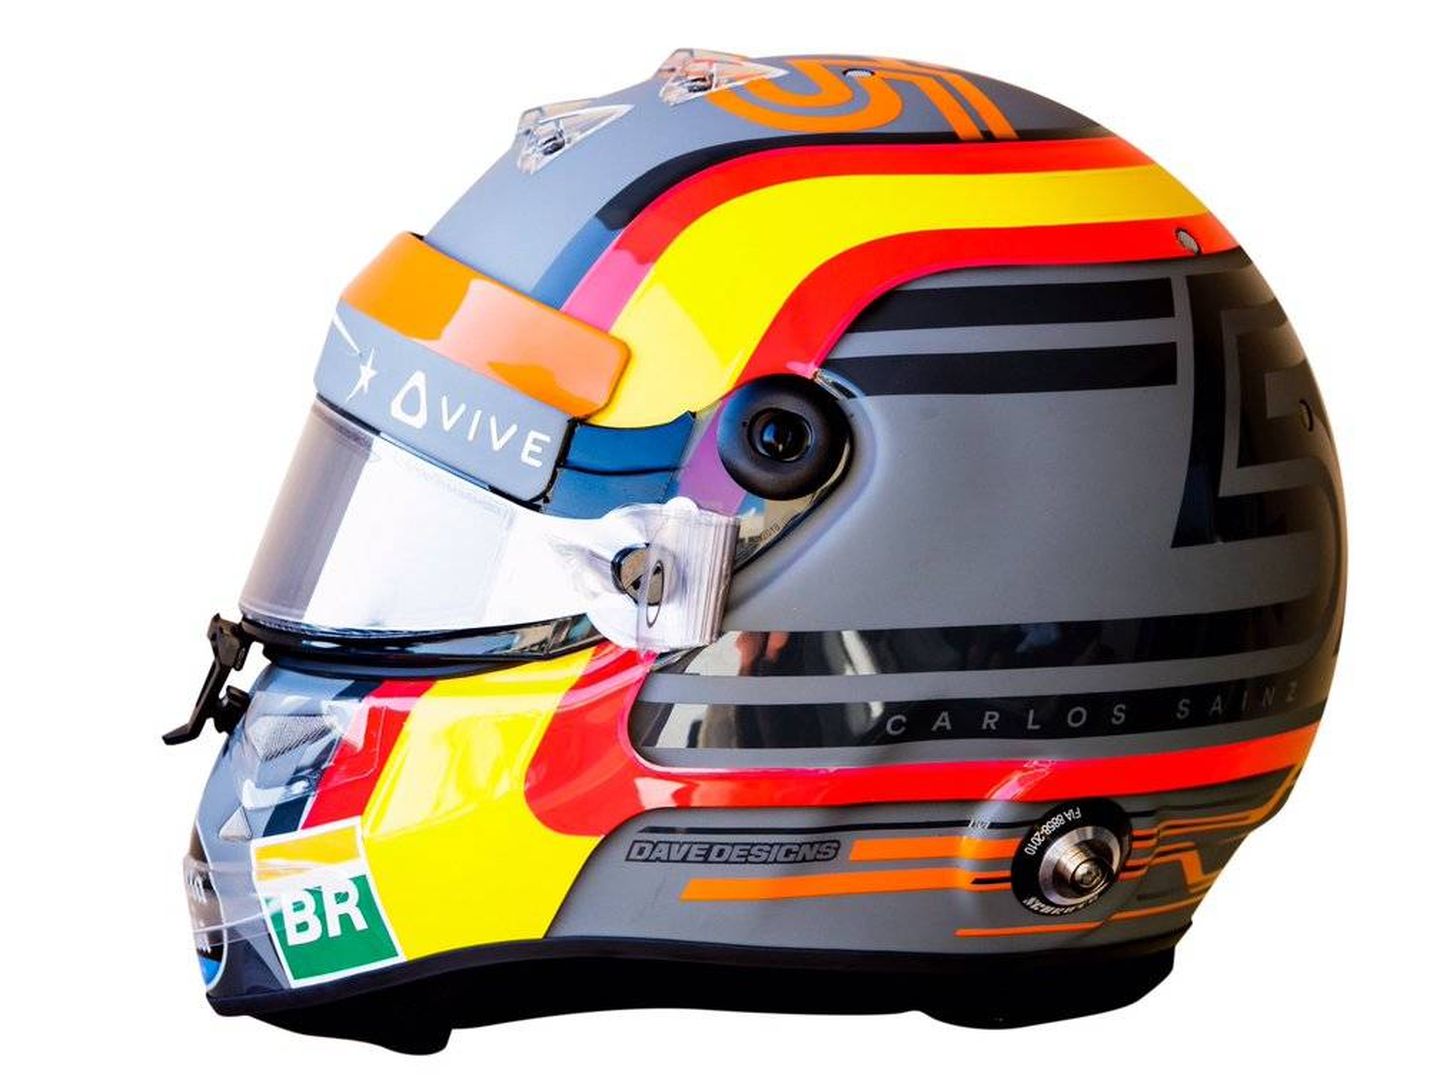 El nuevo casco de Sainz. (Twitter: @Carlossainz55)